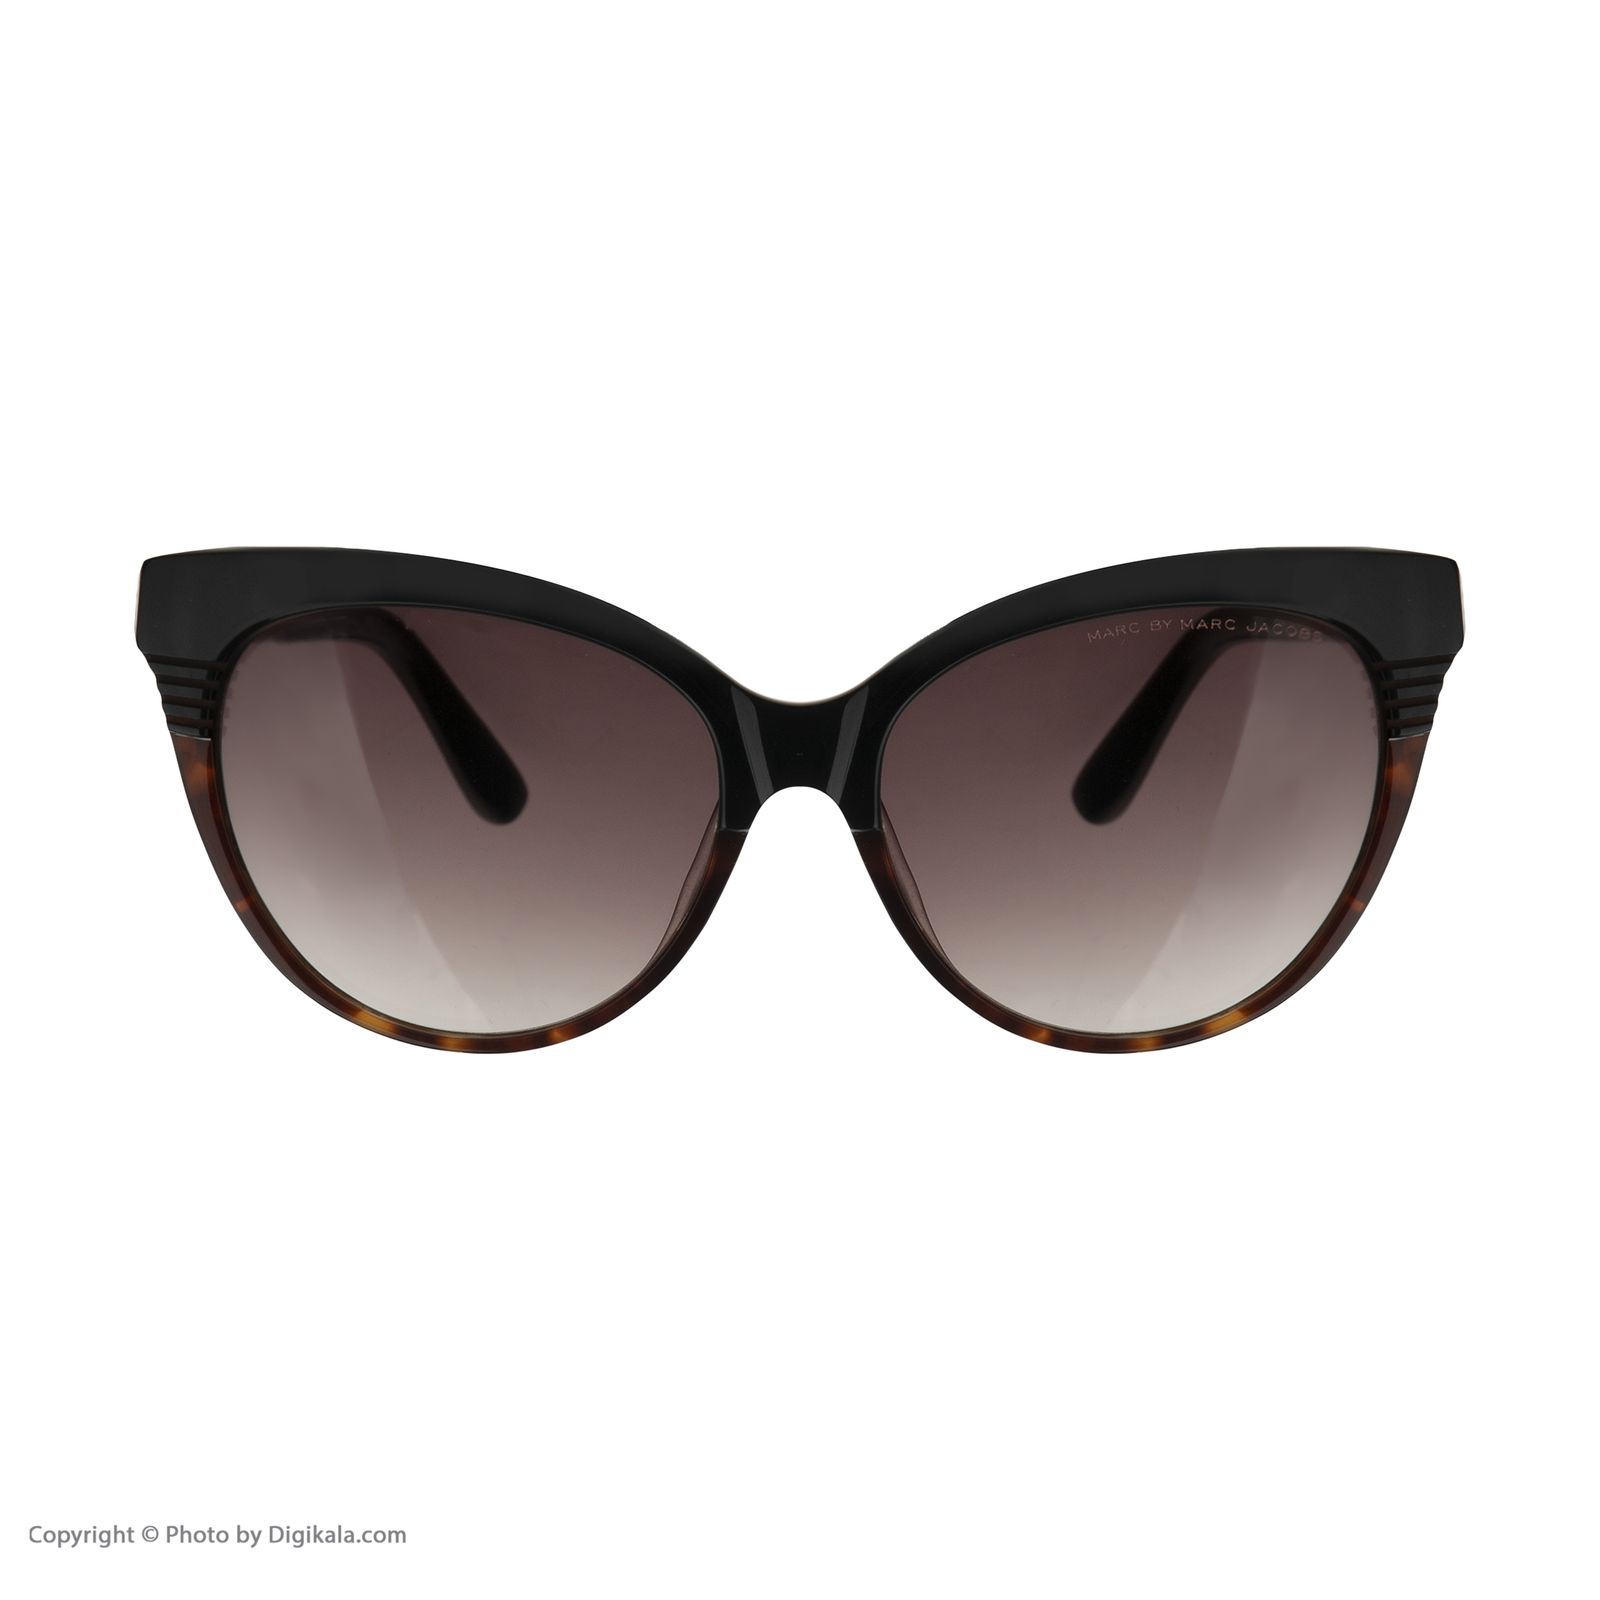  عینک آفتابی مارک جکوبس مدل 390 -  - 2